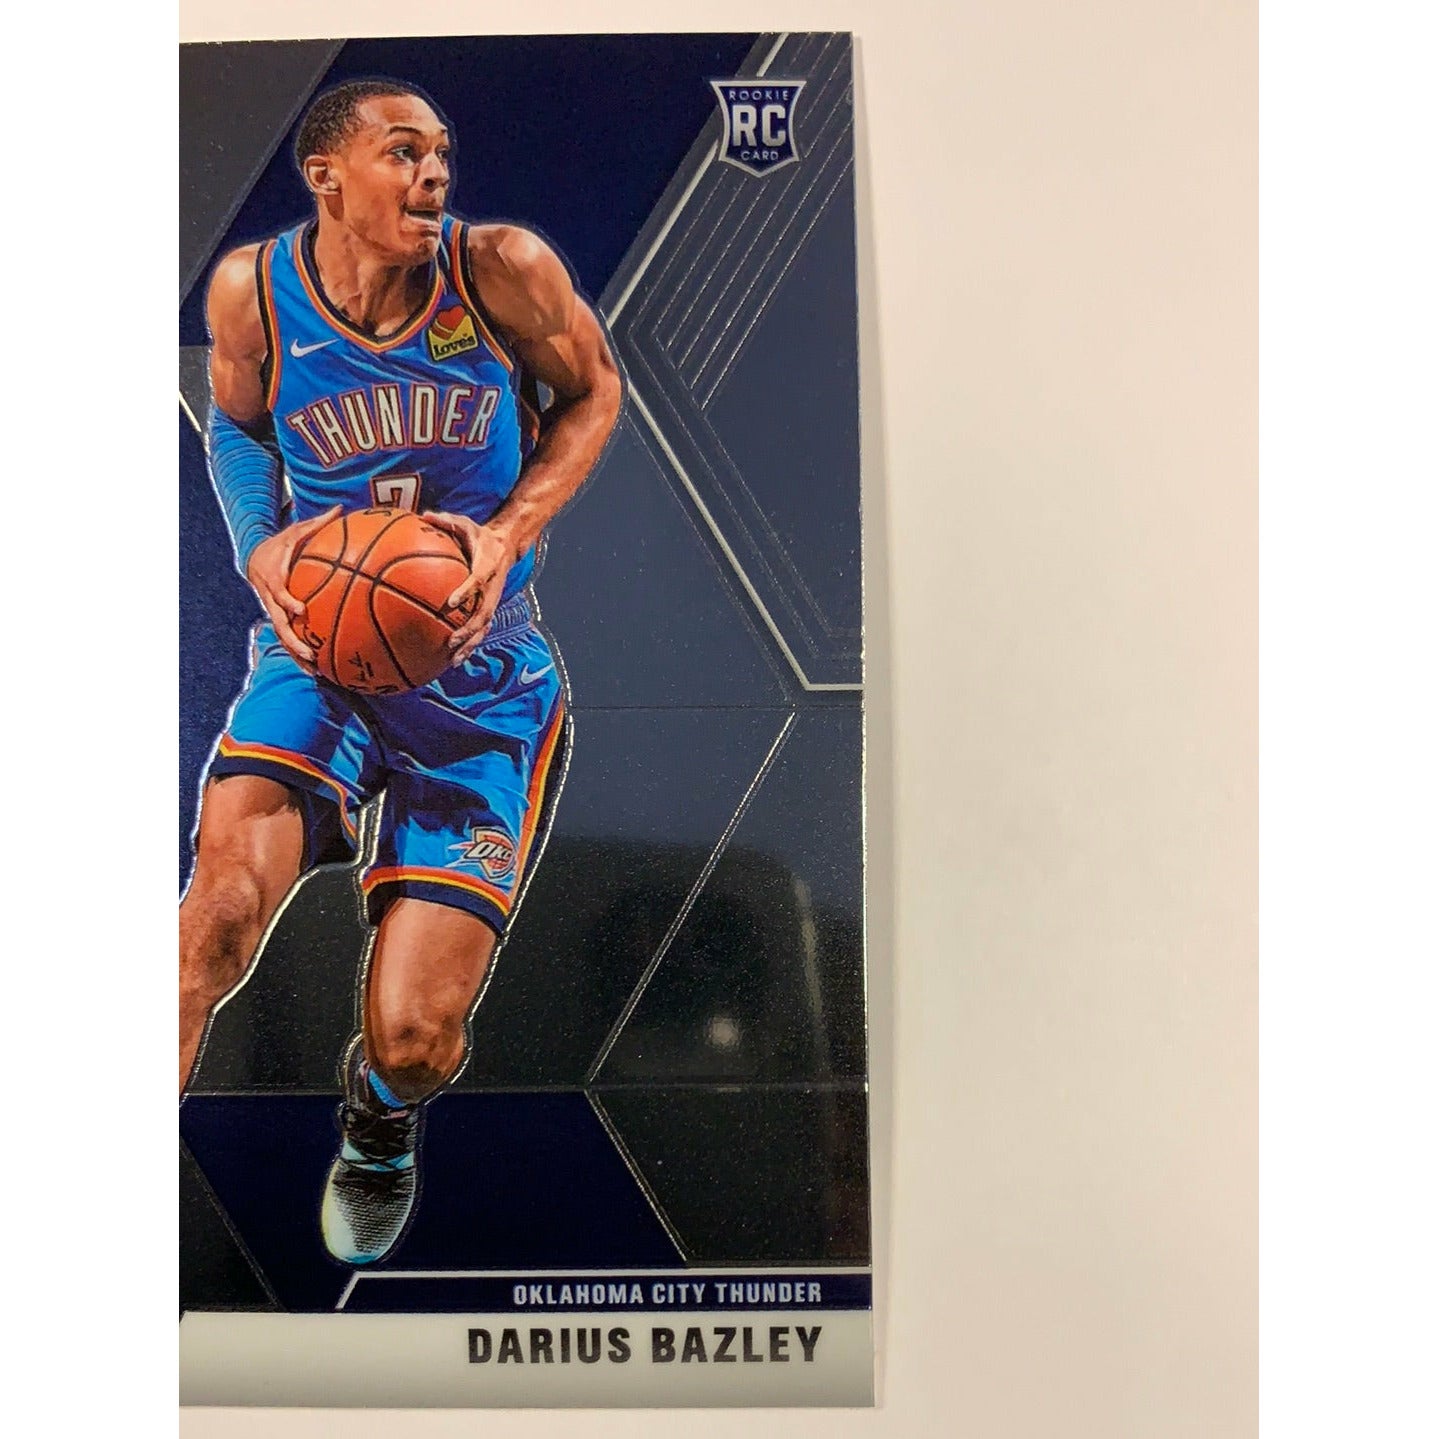  2019-20 Mosaic Darius Bazley RC  Local Legends Cards & Collectibles